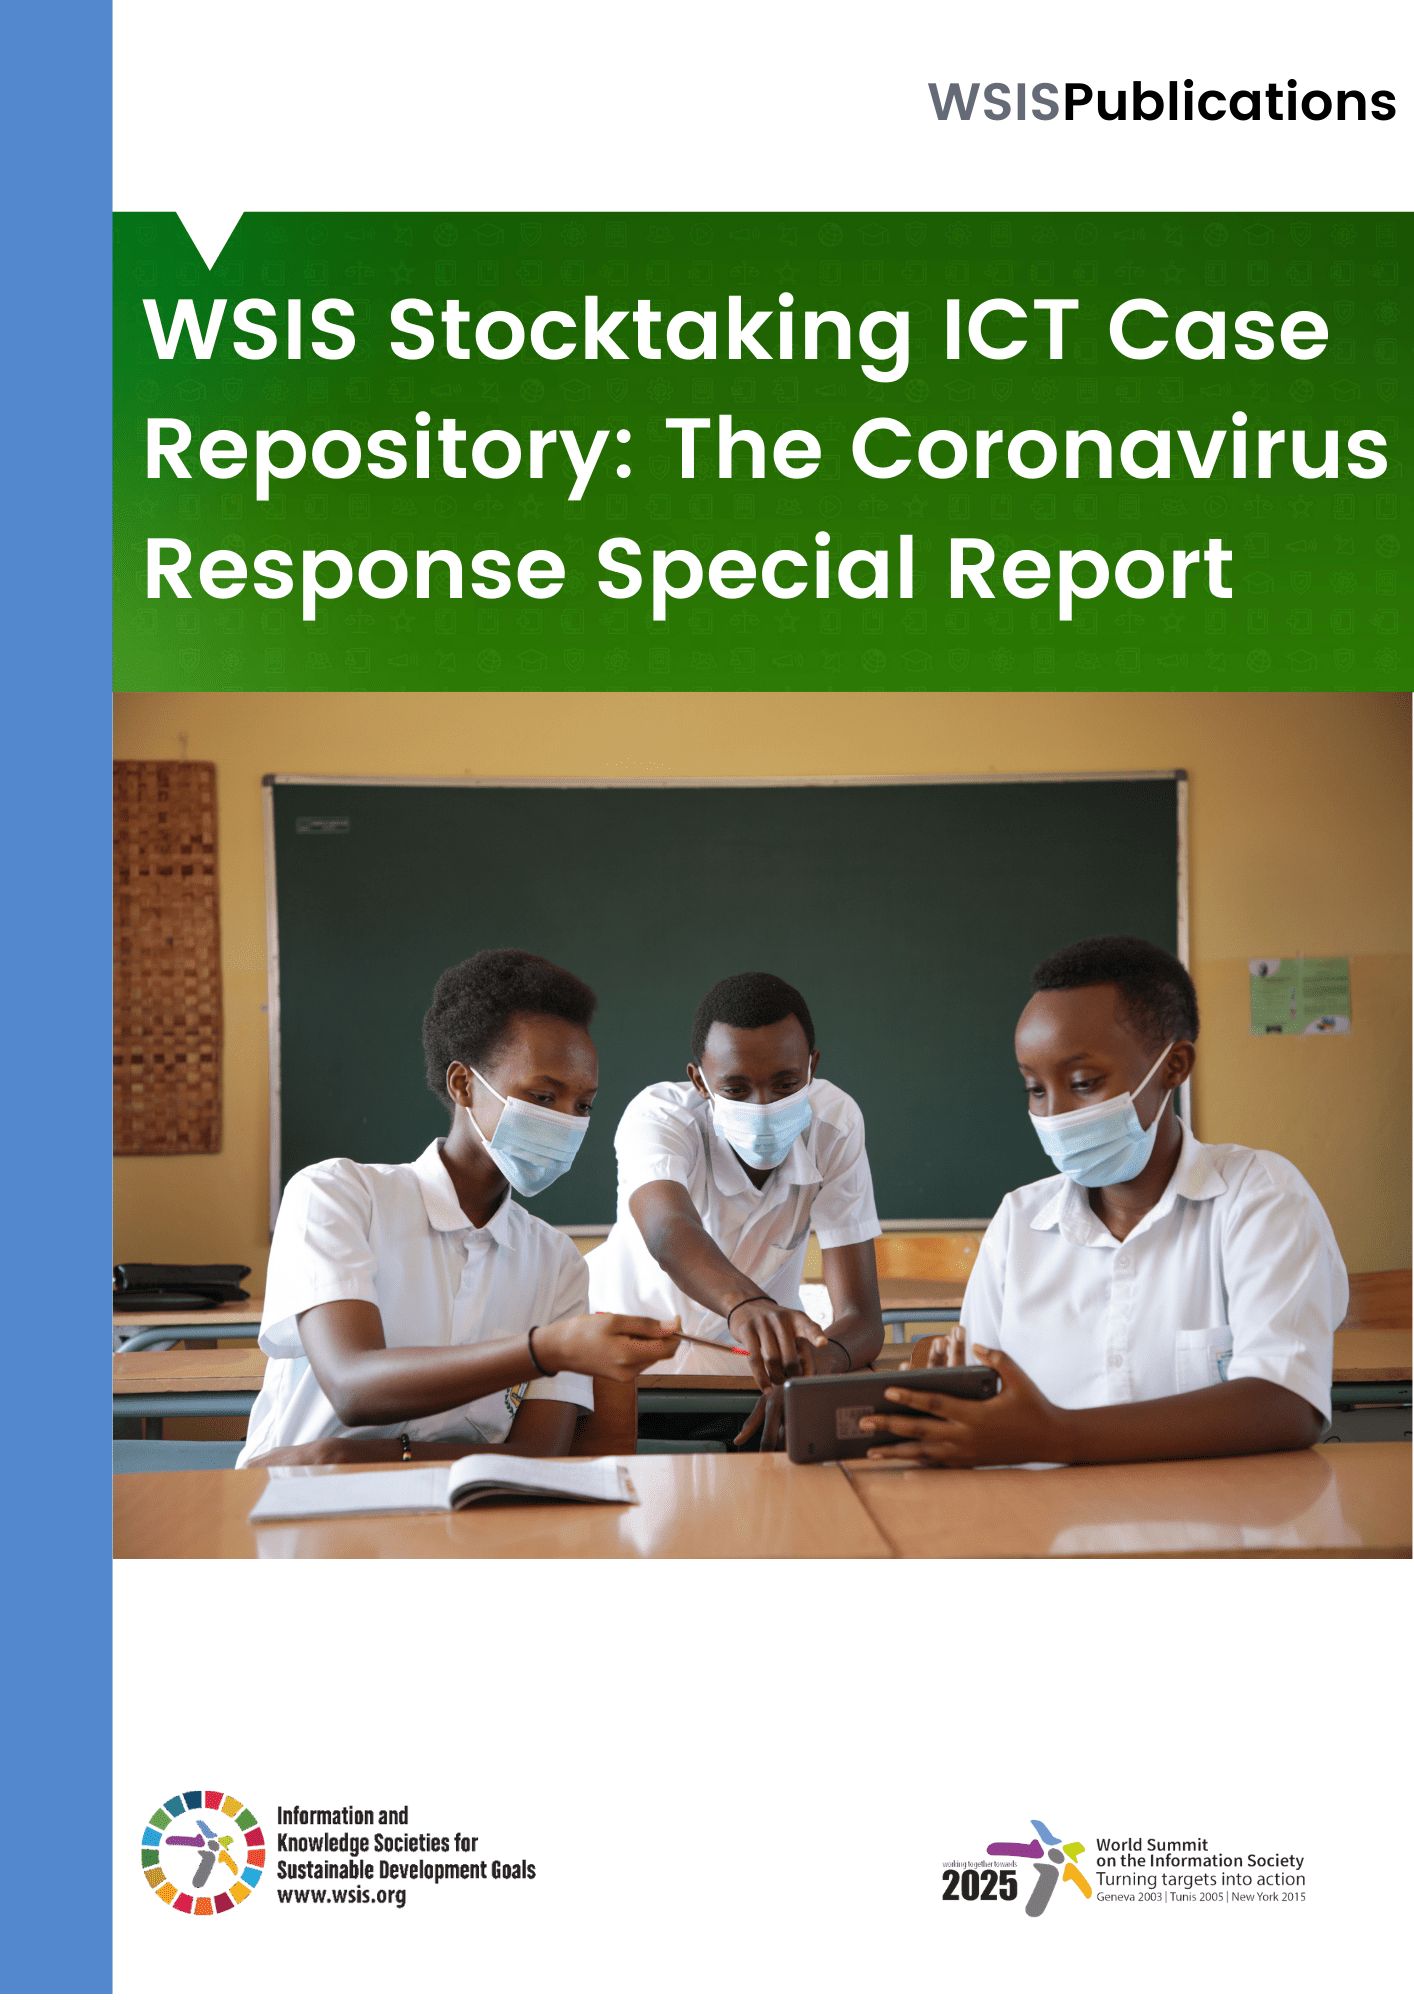 WSIS Stocktaking ICT Case Repository: The Coronavirus Response Special Report